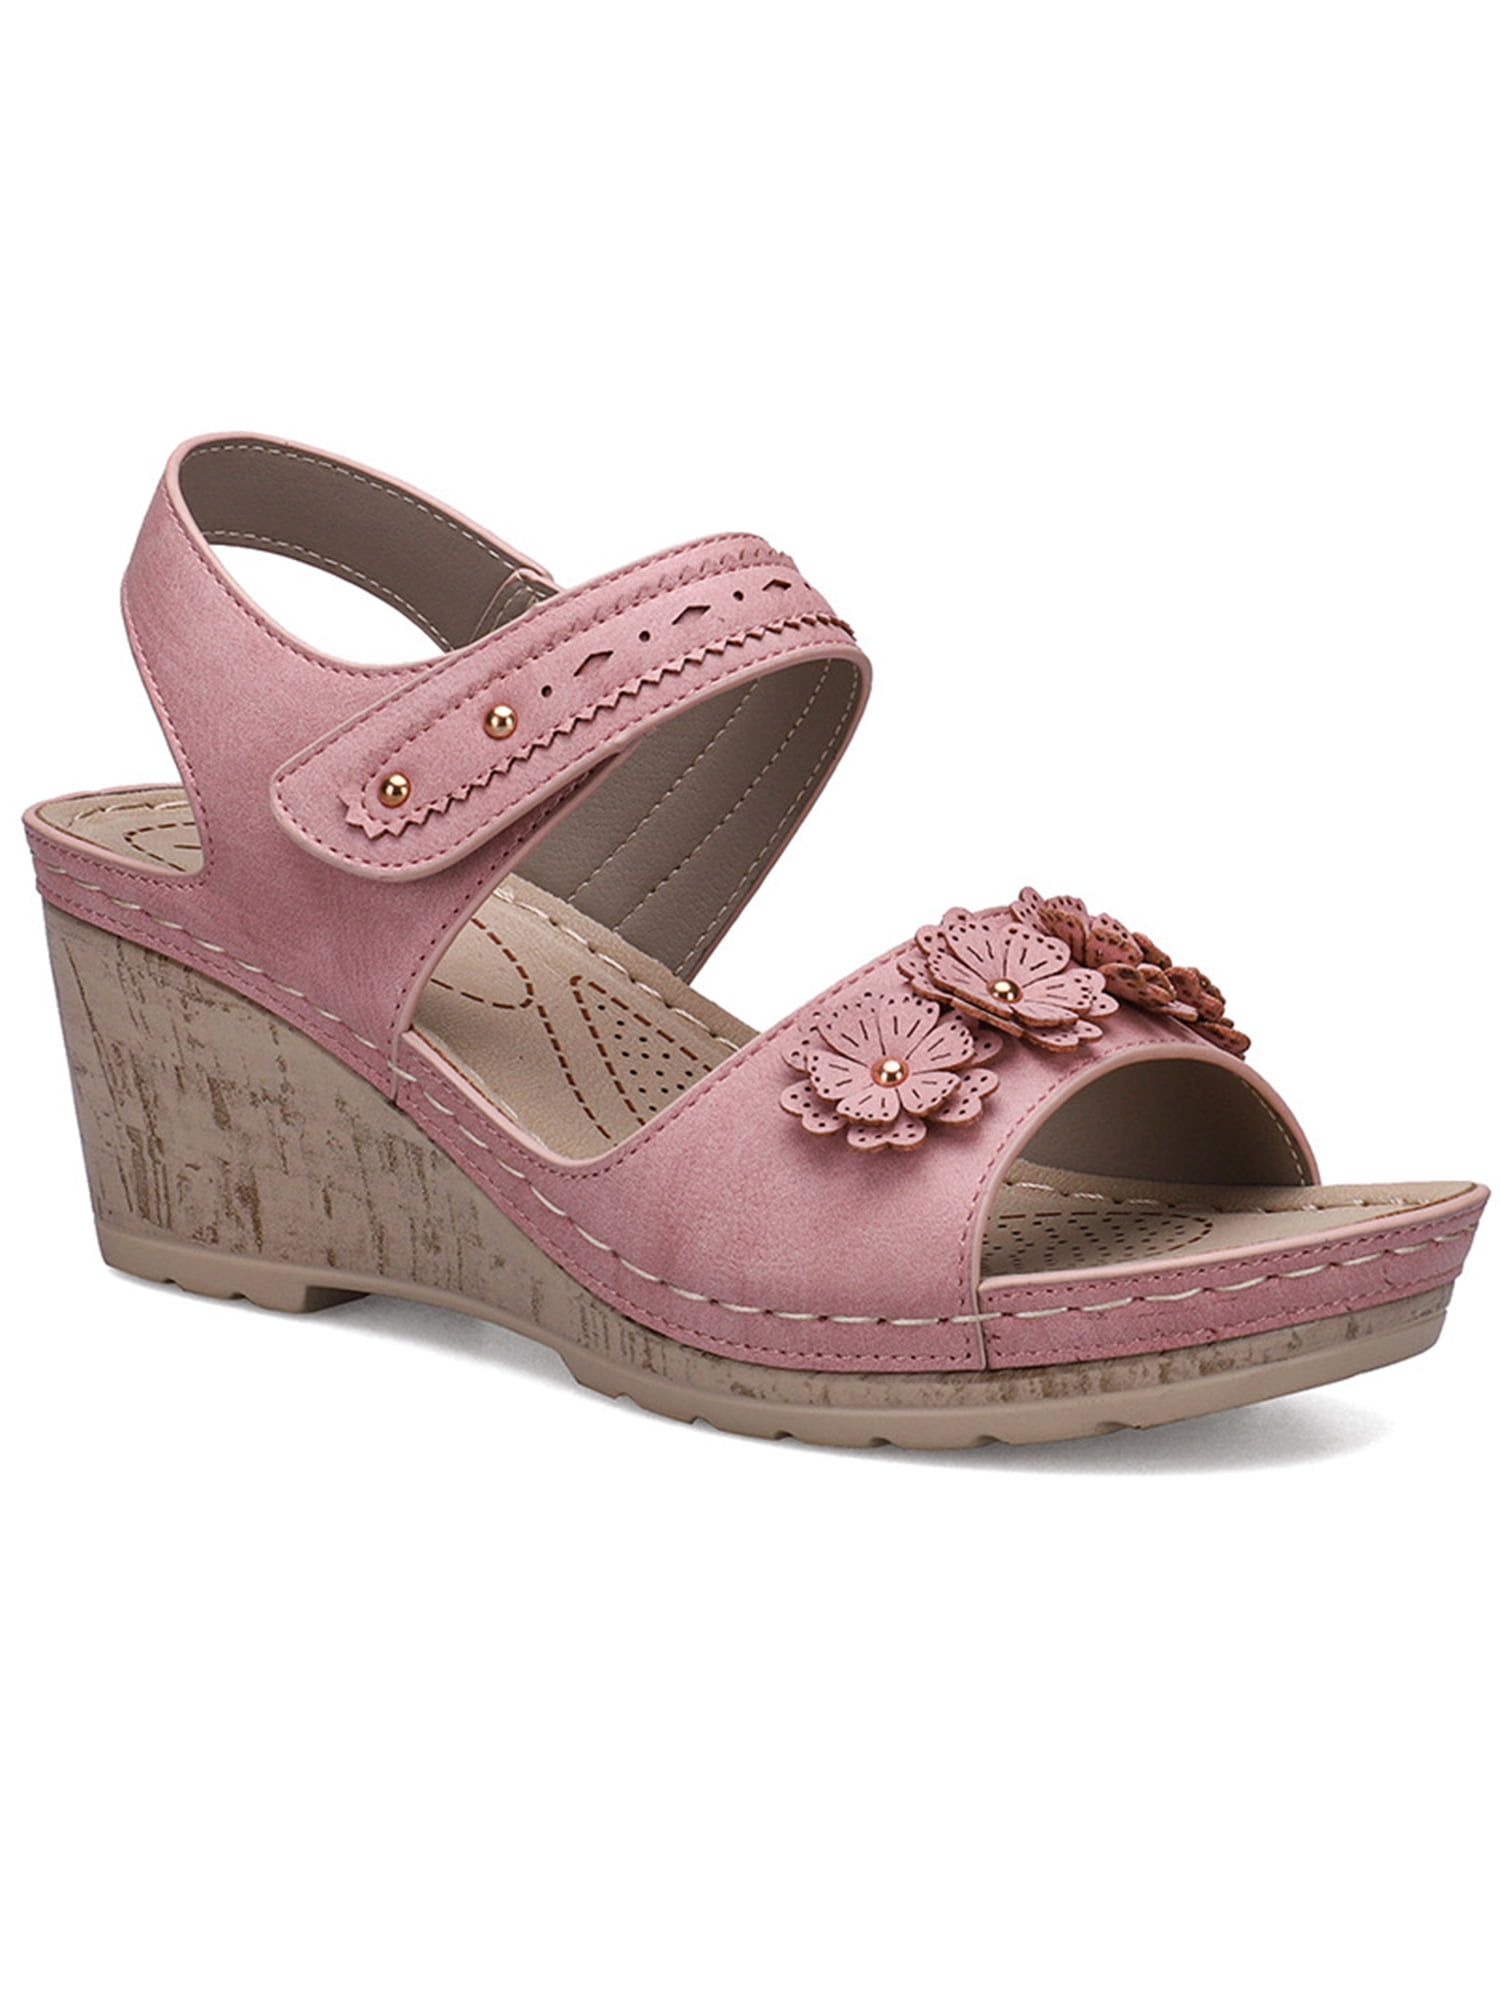 2019 Ladies Peep toe Wedge Platform High heel Floral Slippers Sandals shoes Size 